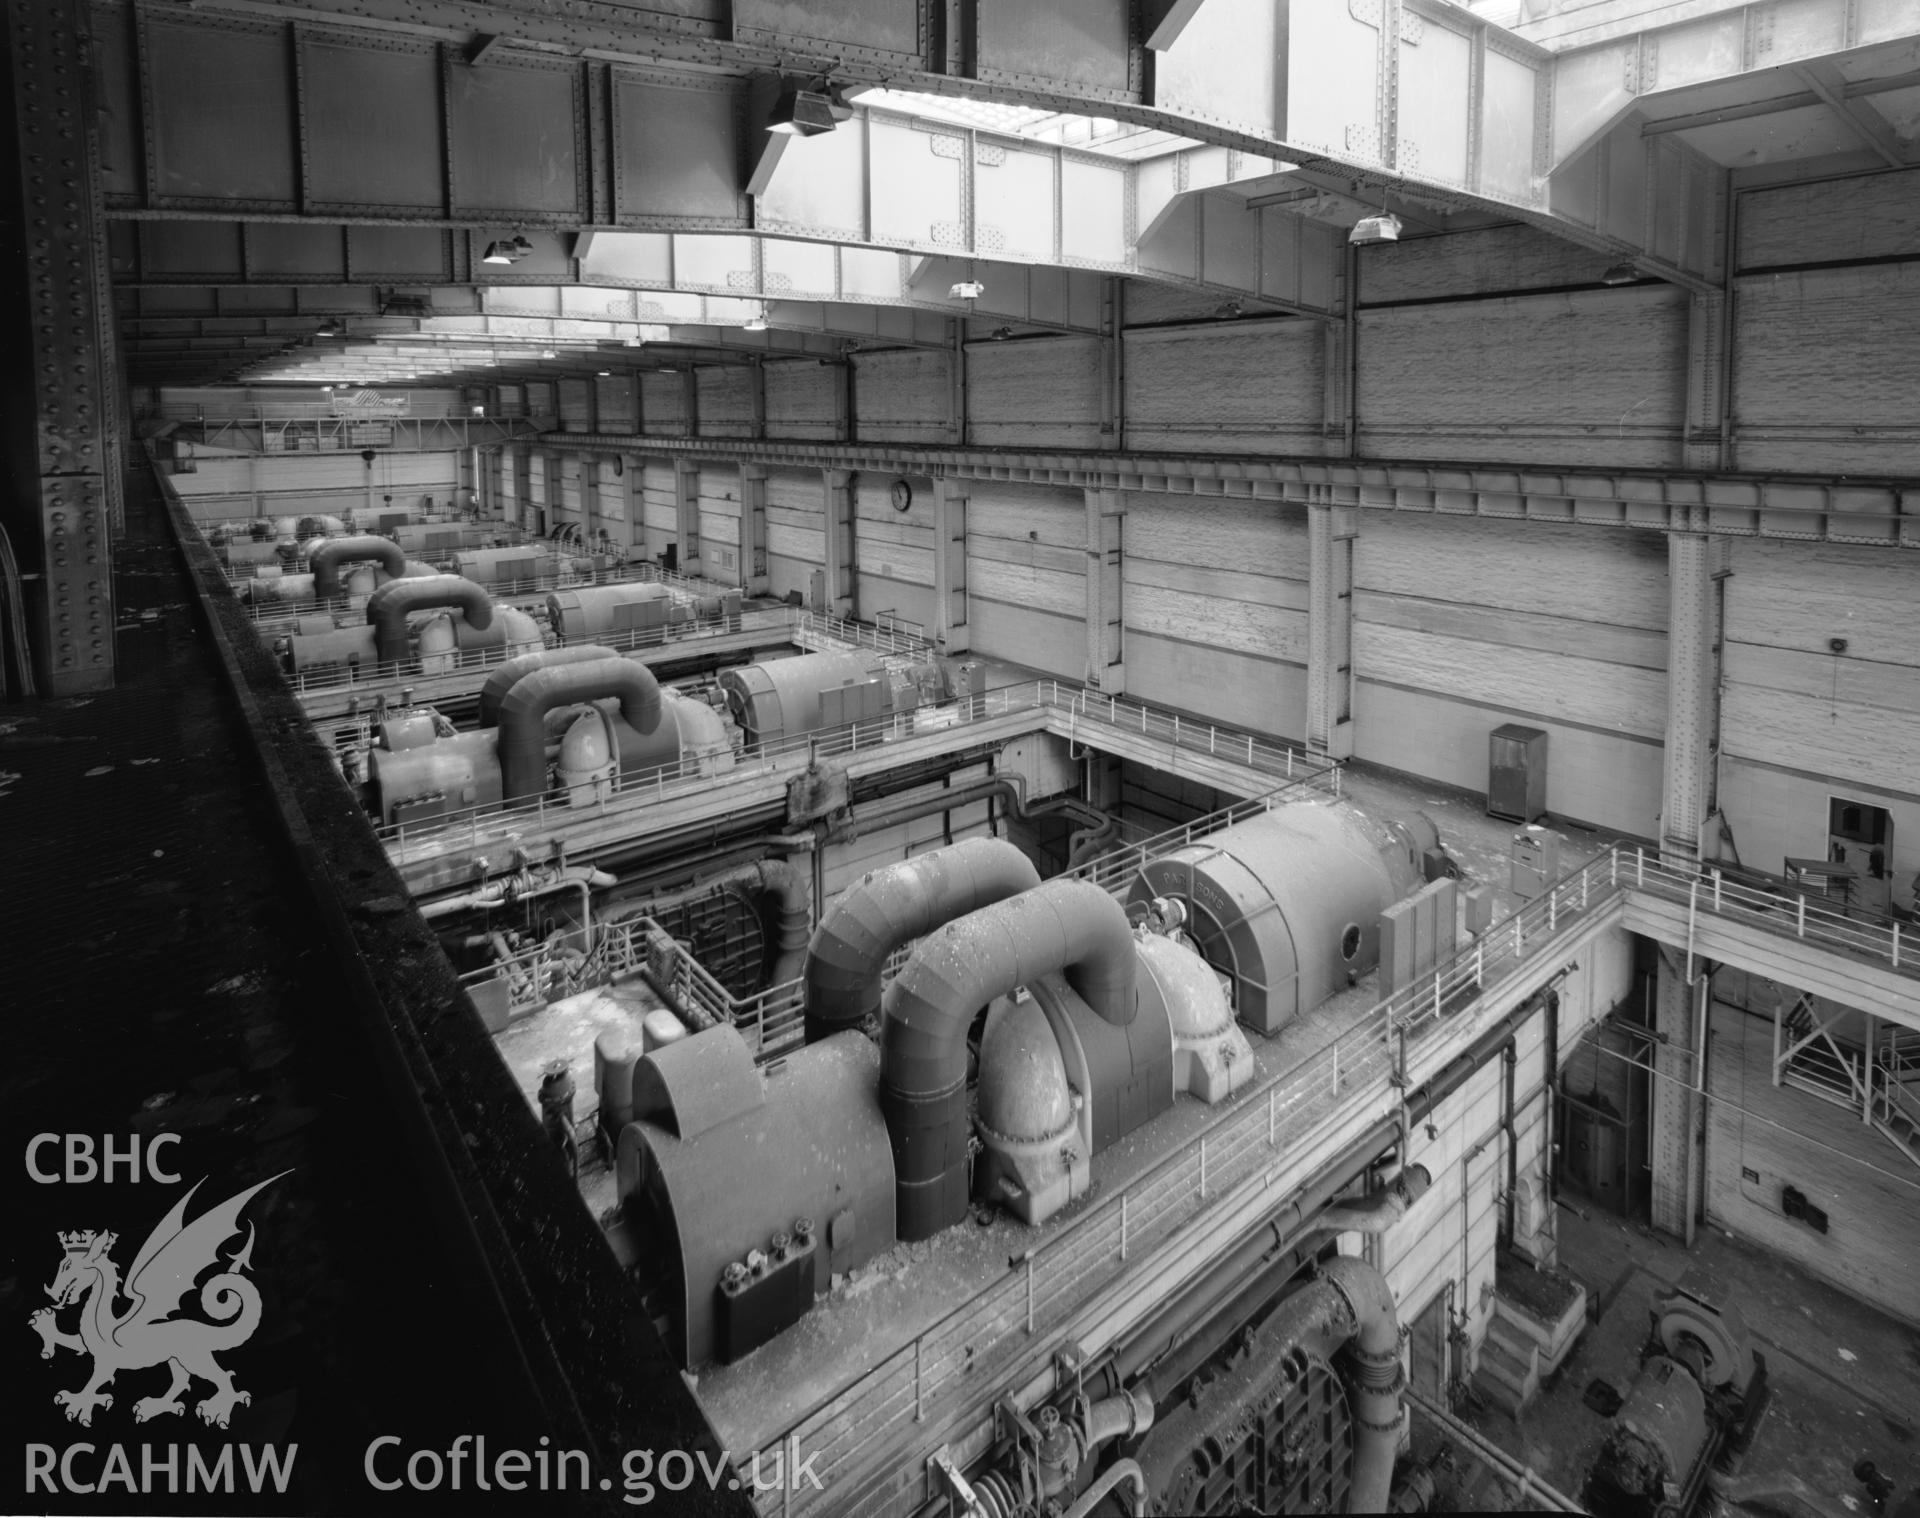 Turbine Generator Hall, showing condensors beneath. NA/FL/93/014